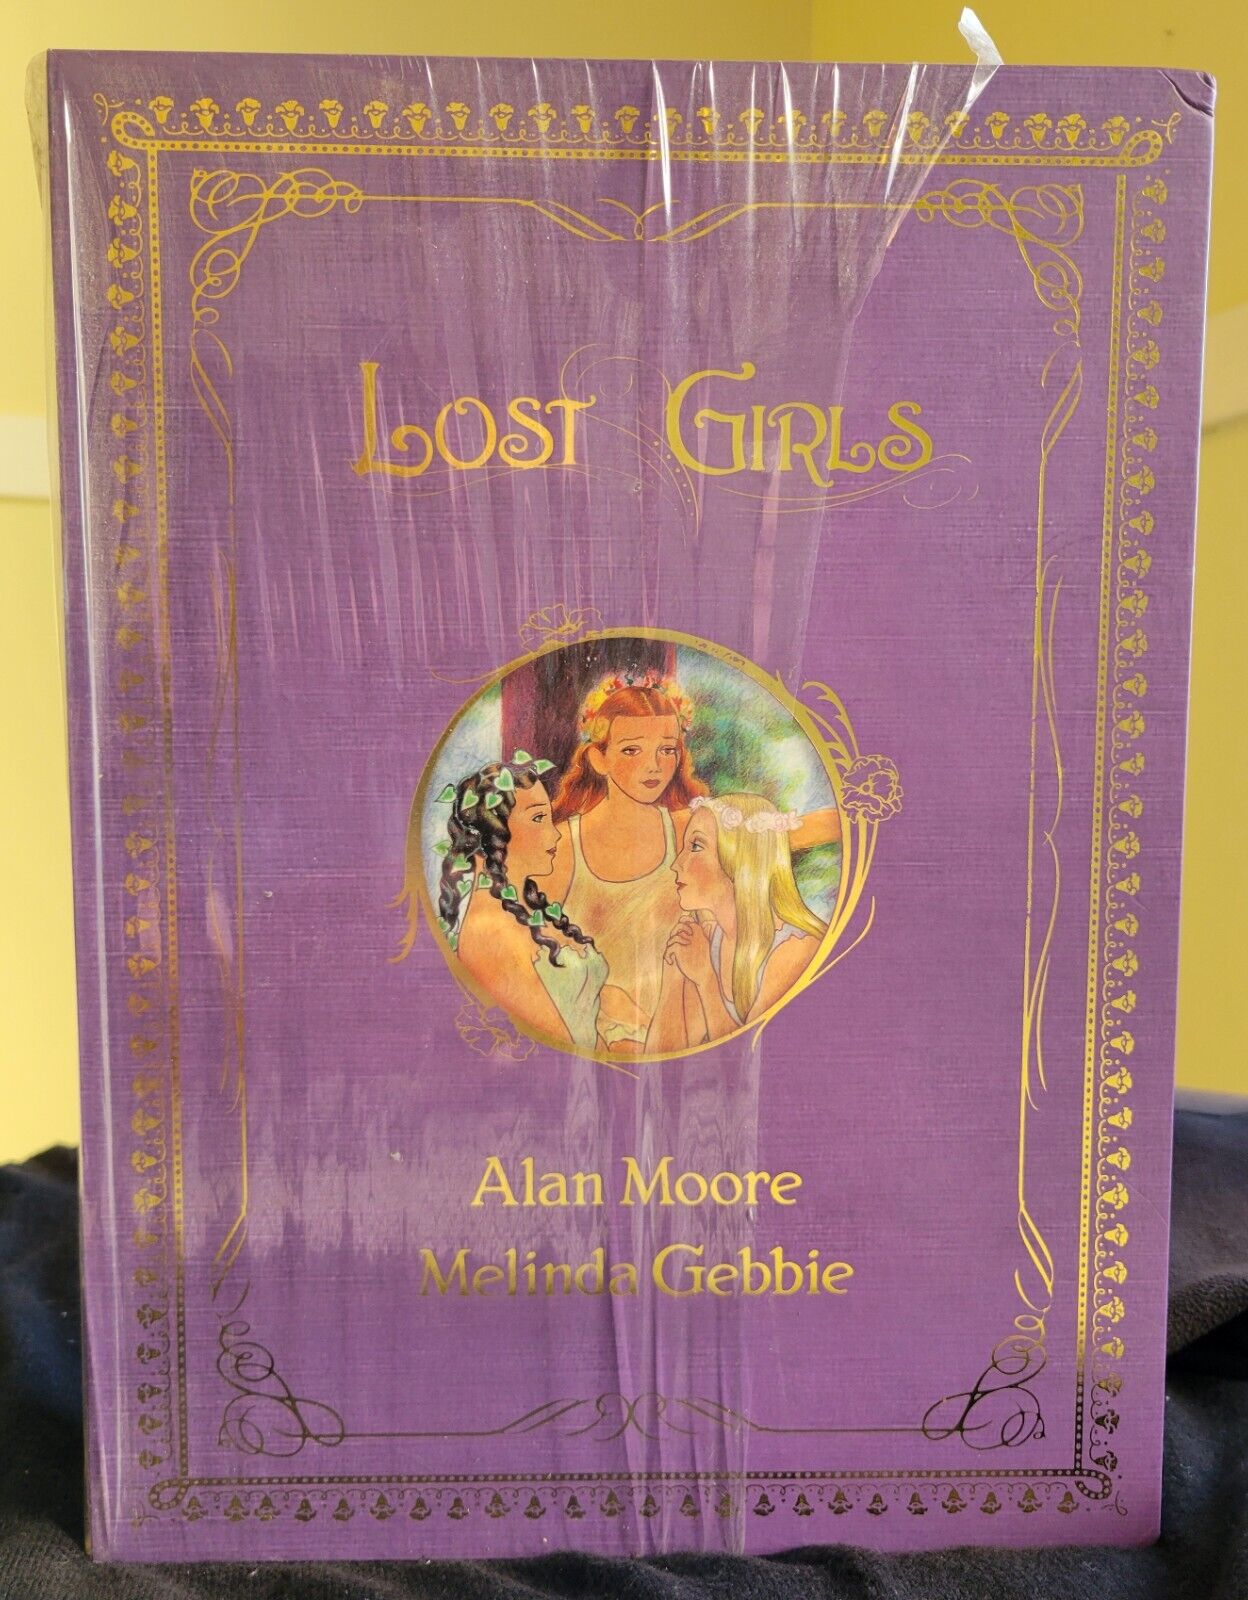 LOST GIRLS box set 3 hardcover vols. By Alan Moore and Melinda Gebbie. 1995 ed.